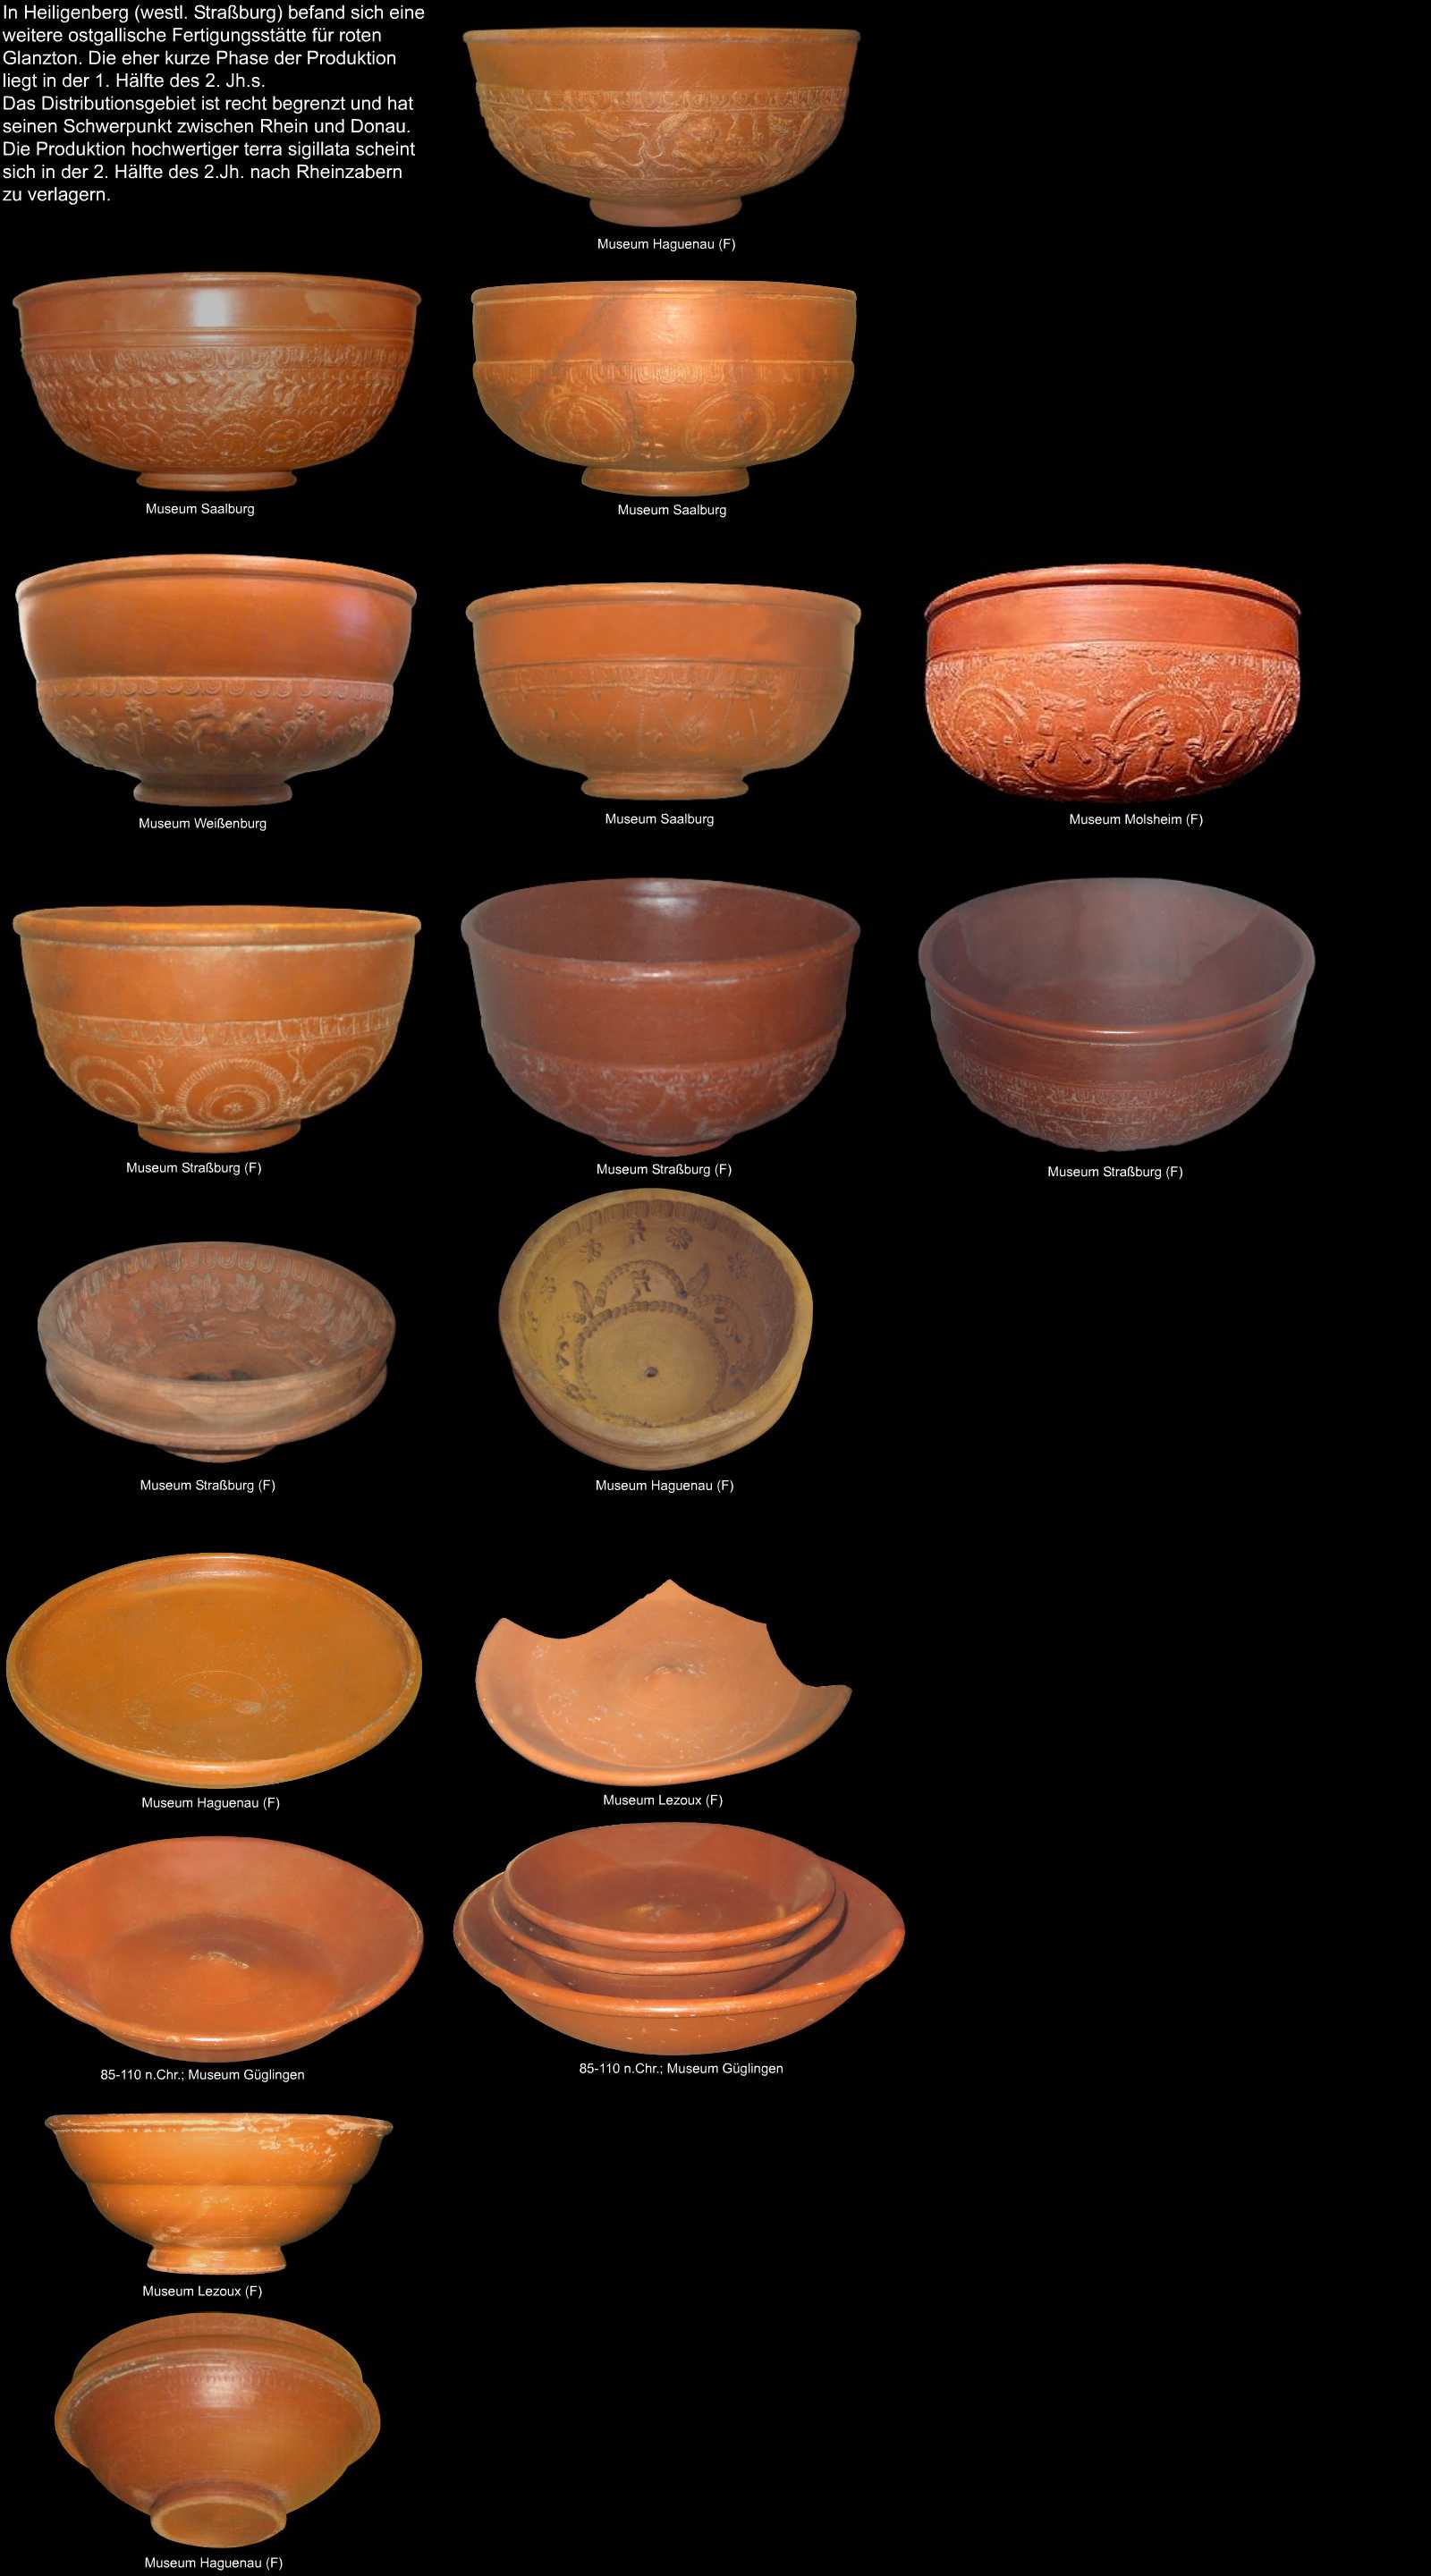 Keramik aus Heiligenberg